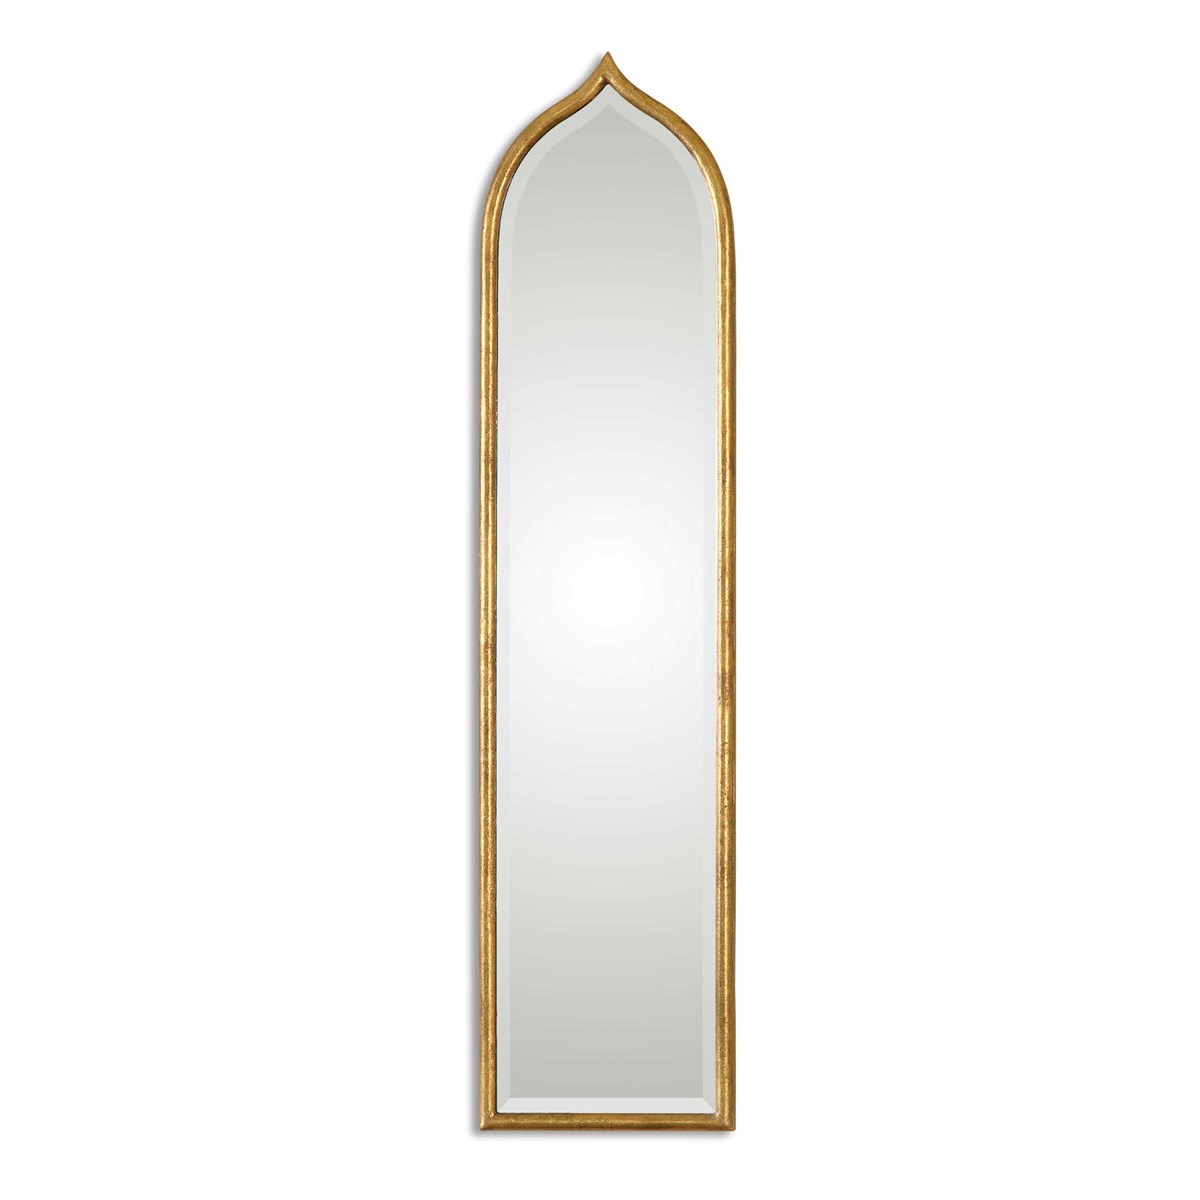 Fedala Gold Mirror - Image 0